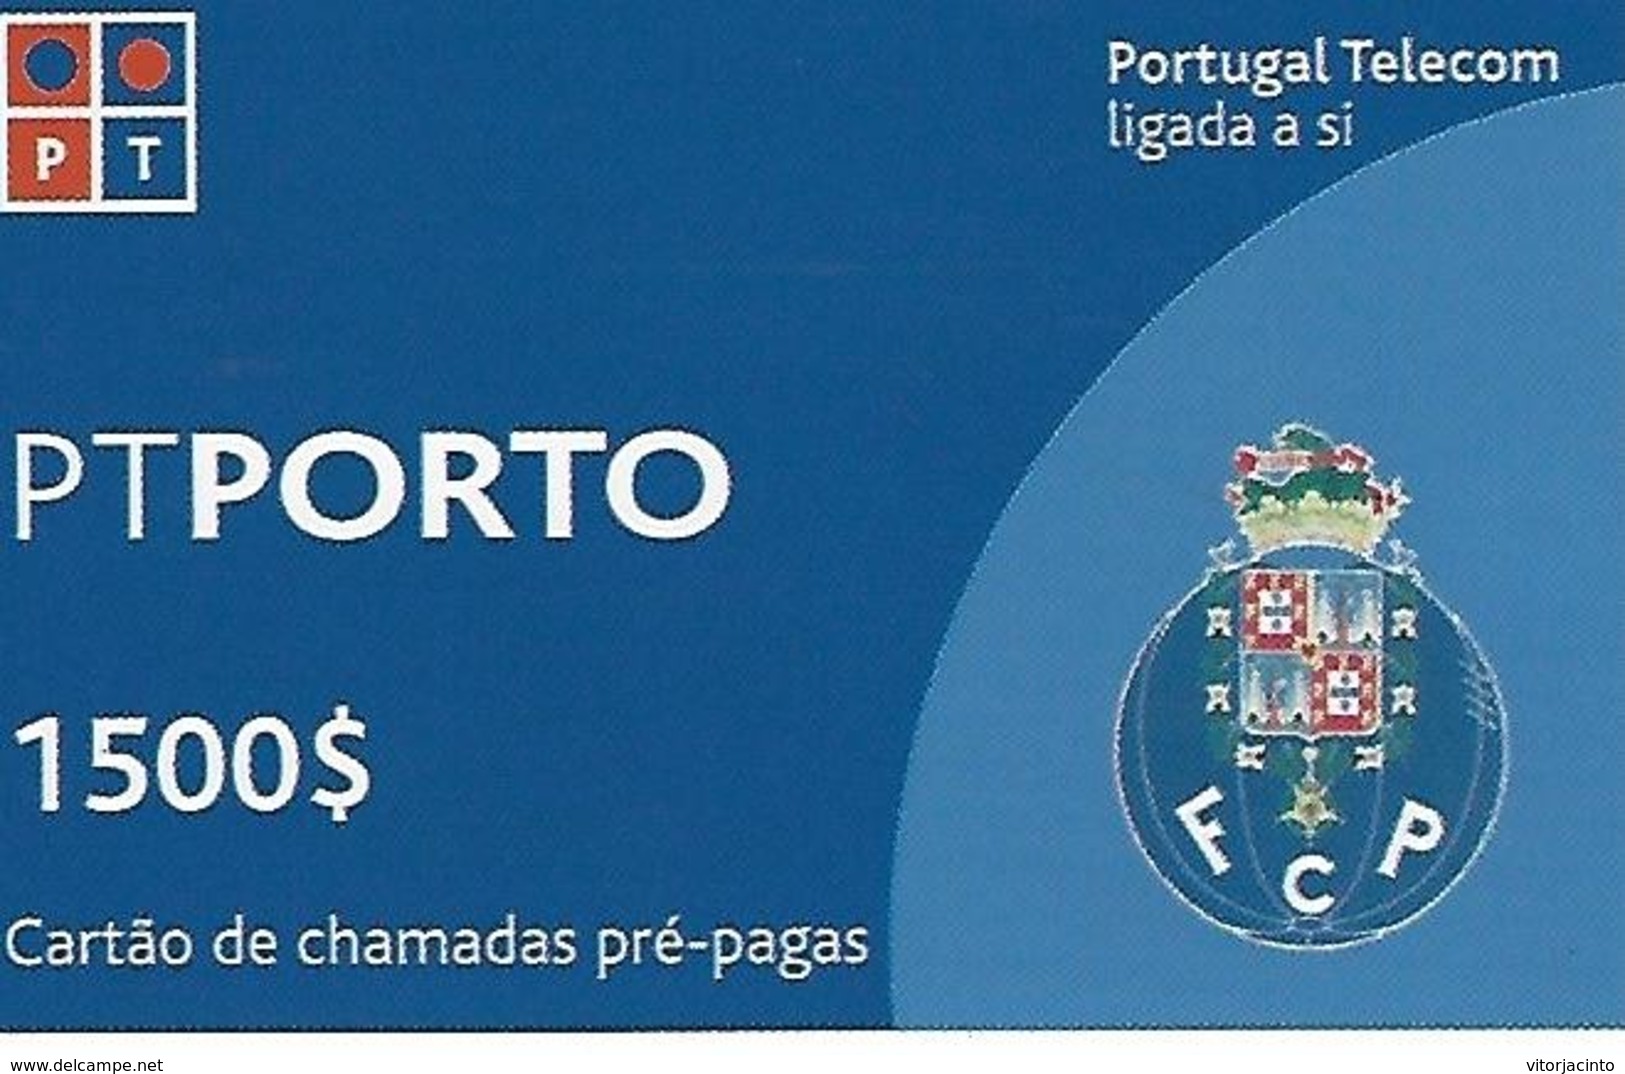 PORTO PT 1500 Prepaid Phonecard - Portugal - Portugal